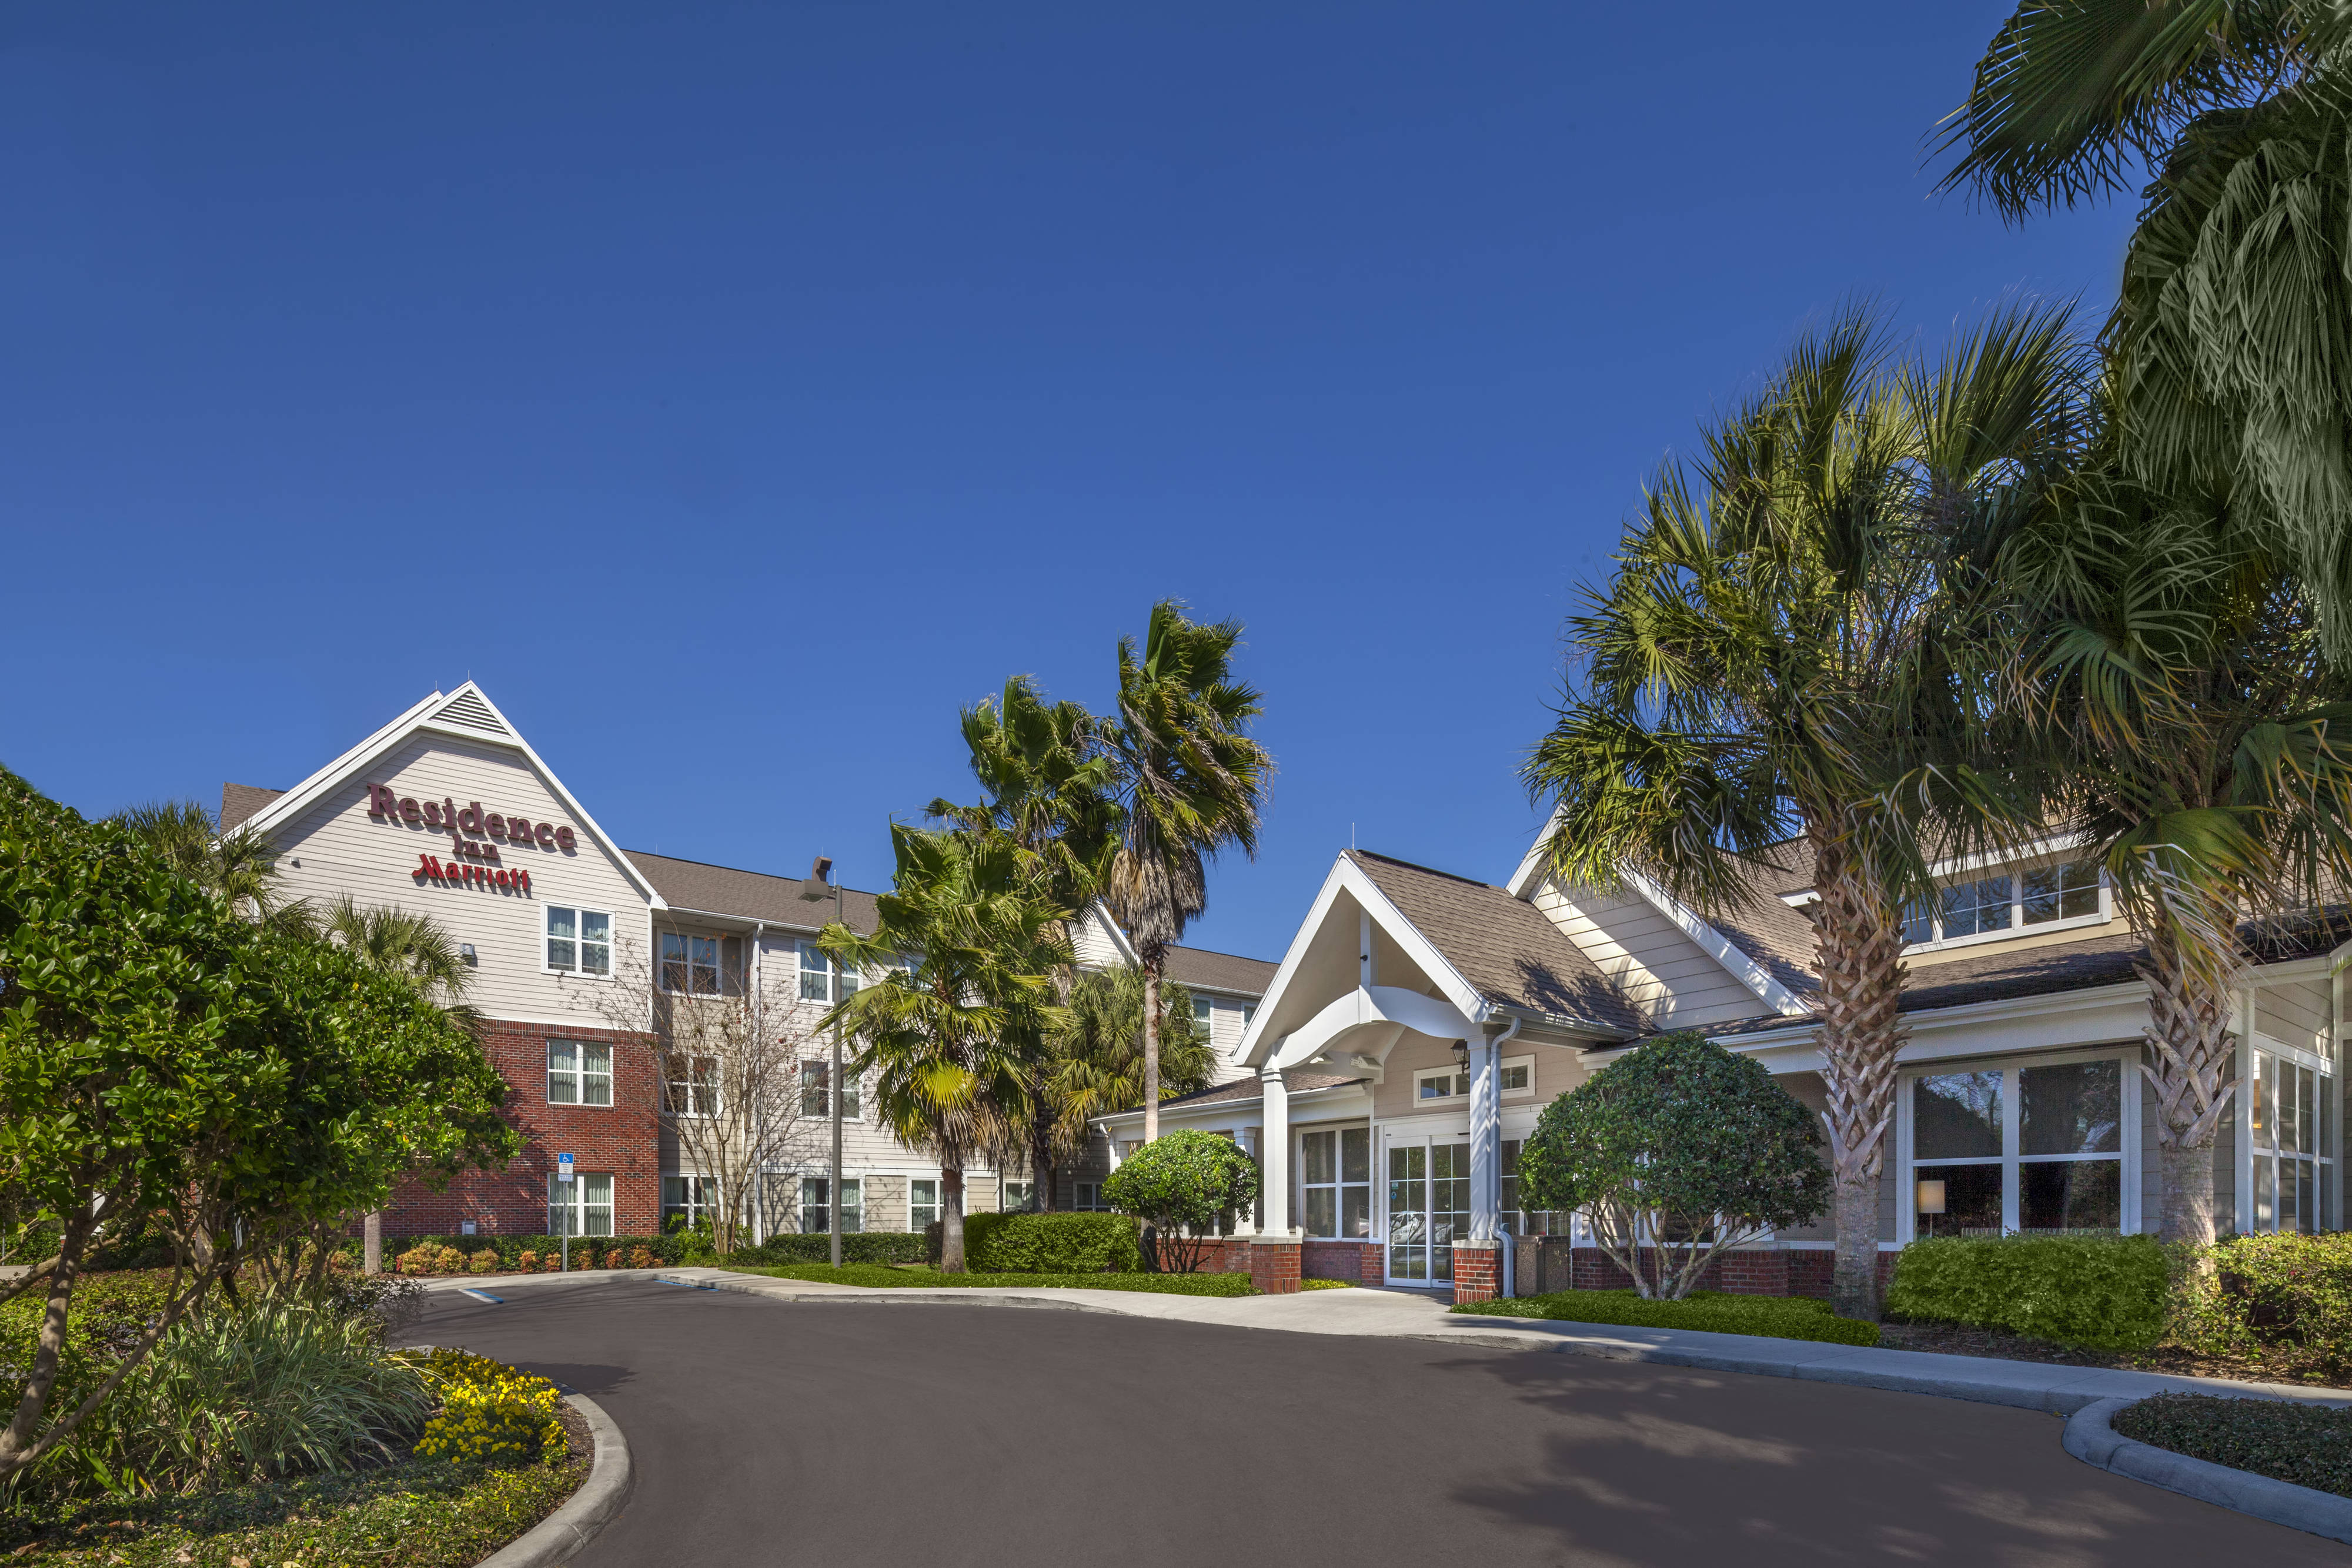 Photo of Residence Inn by Marriott Ocala, Ocala, FL